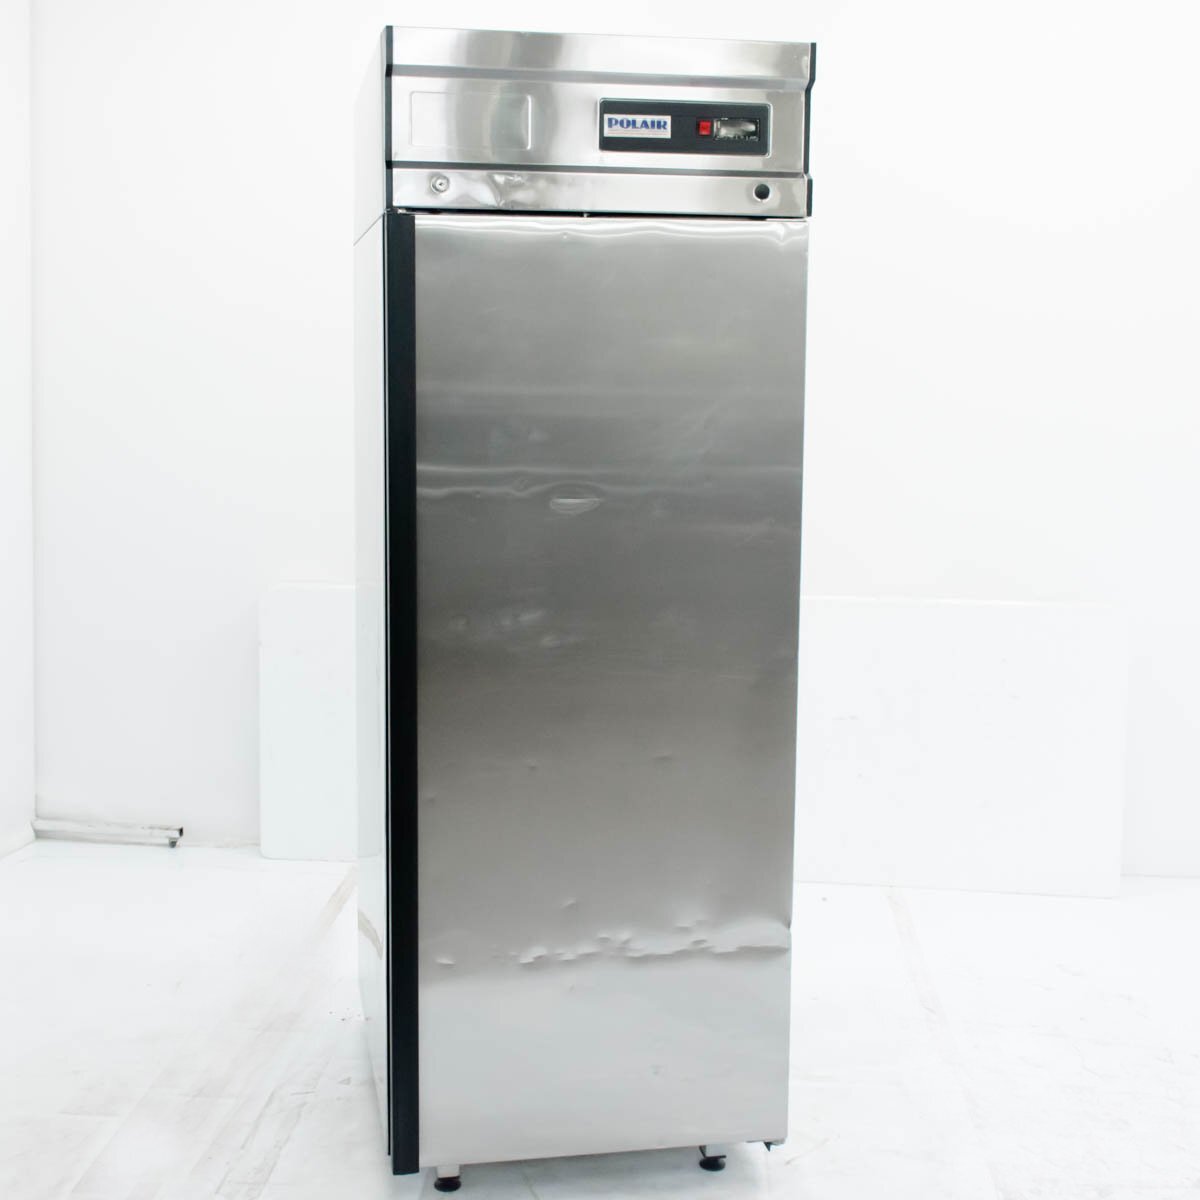 Шкаф холодильный Polair CM107-G